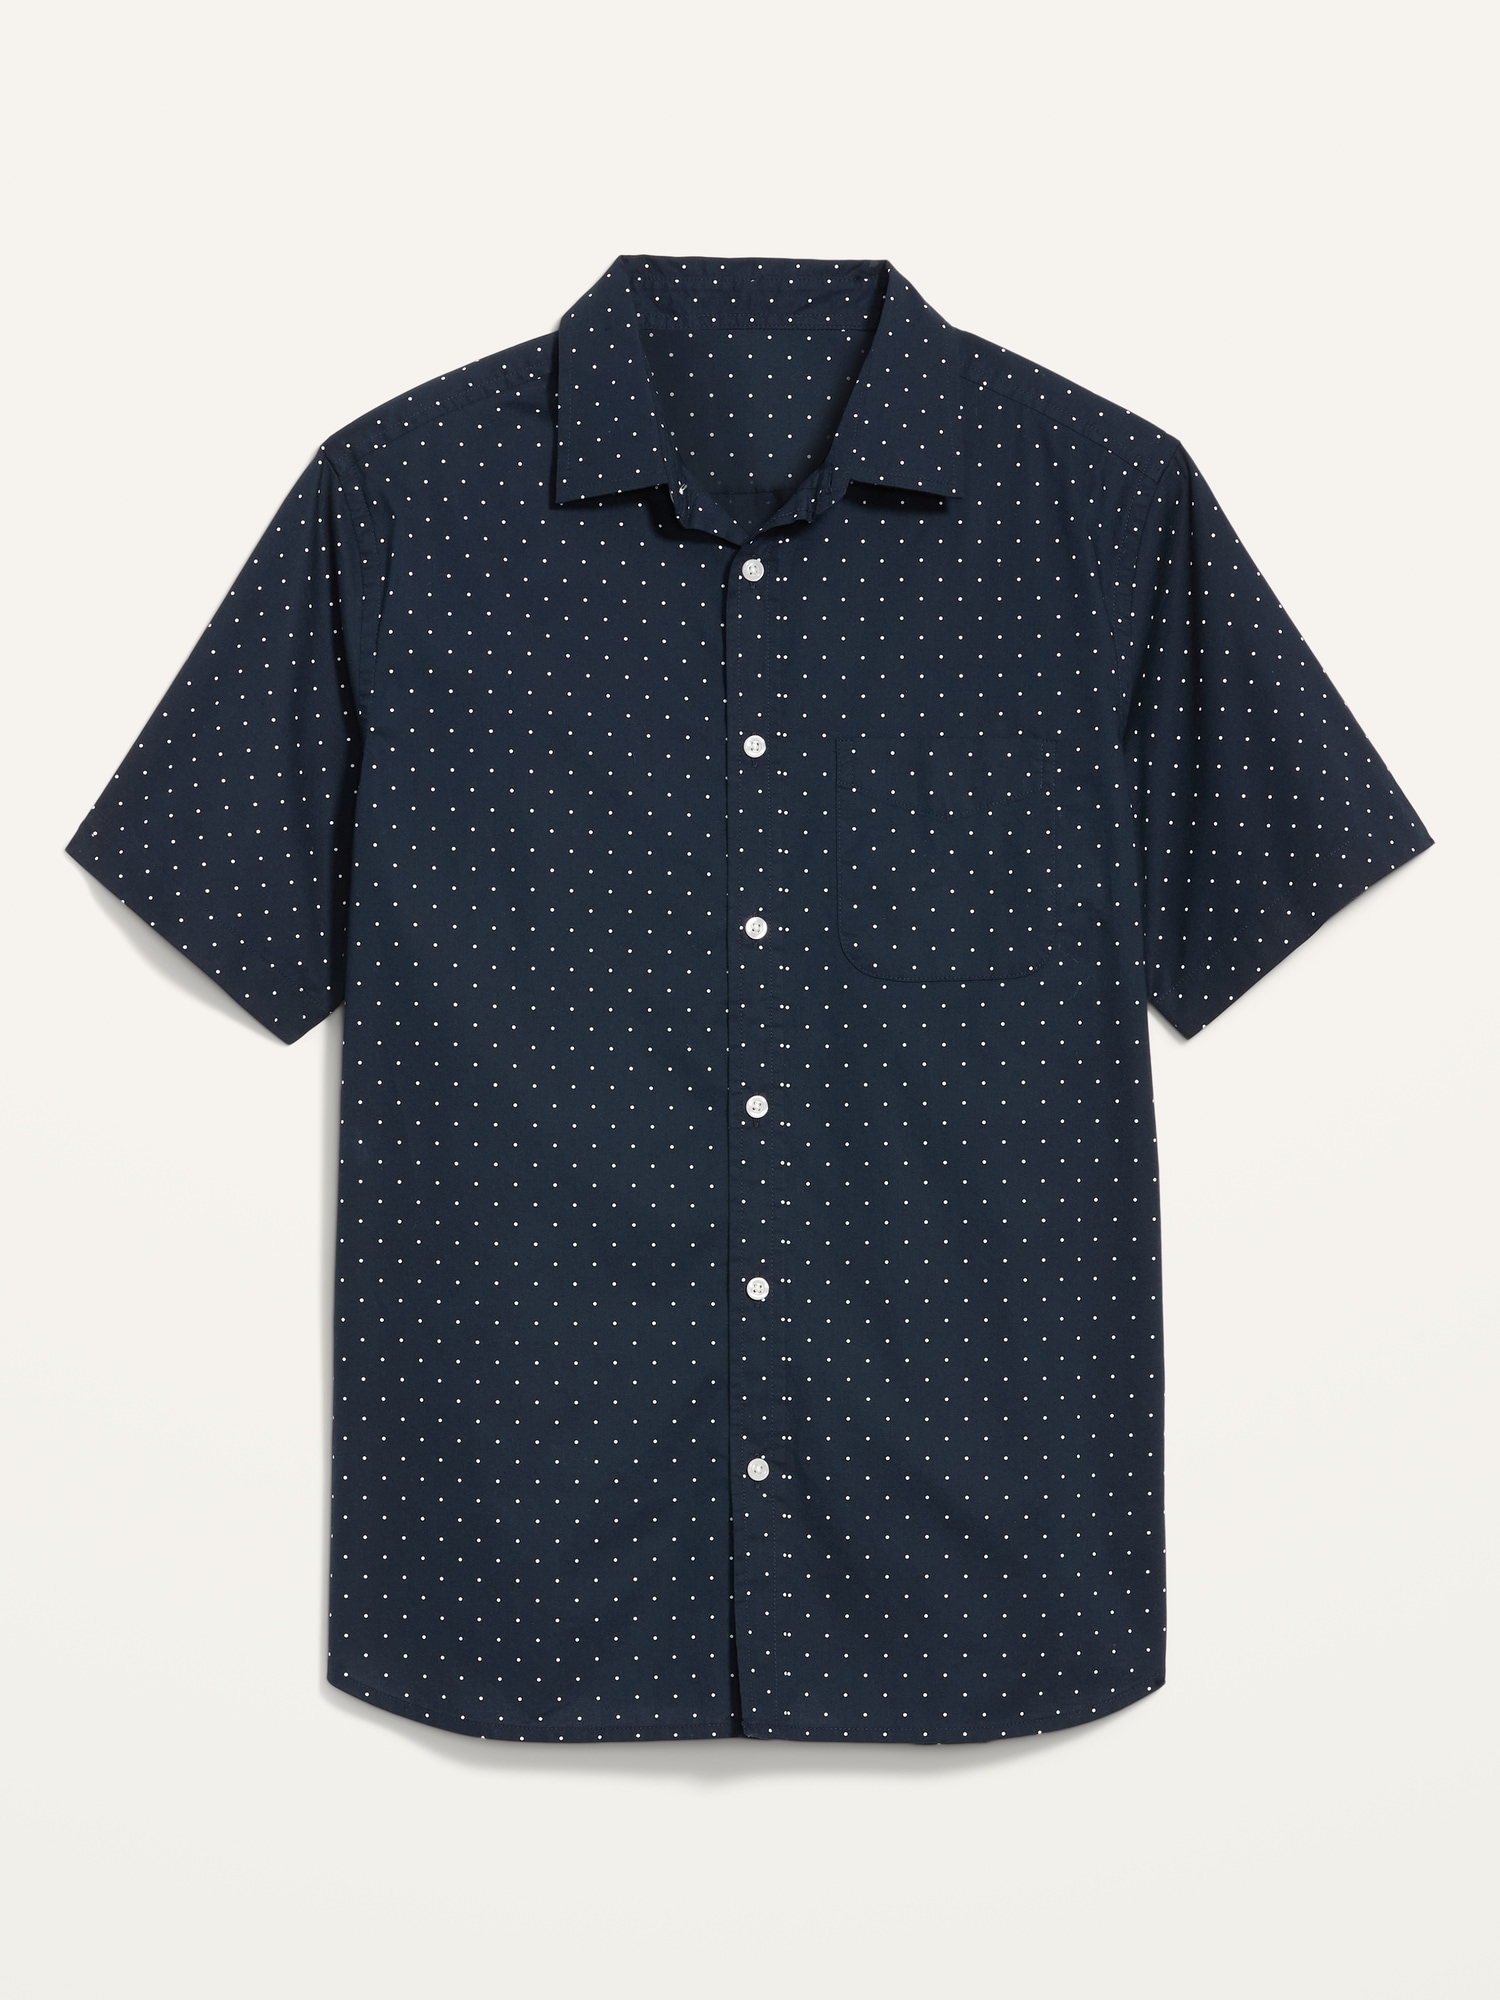 Everyday Built-In Flex Printed Short-Sleeve Shirt for Men | Old Navy